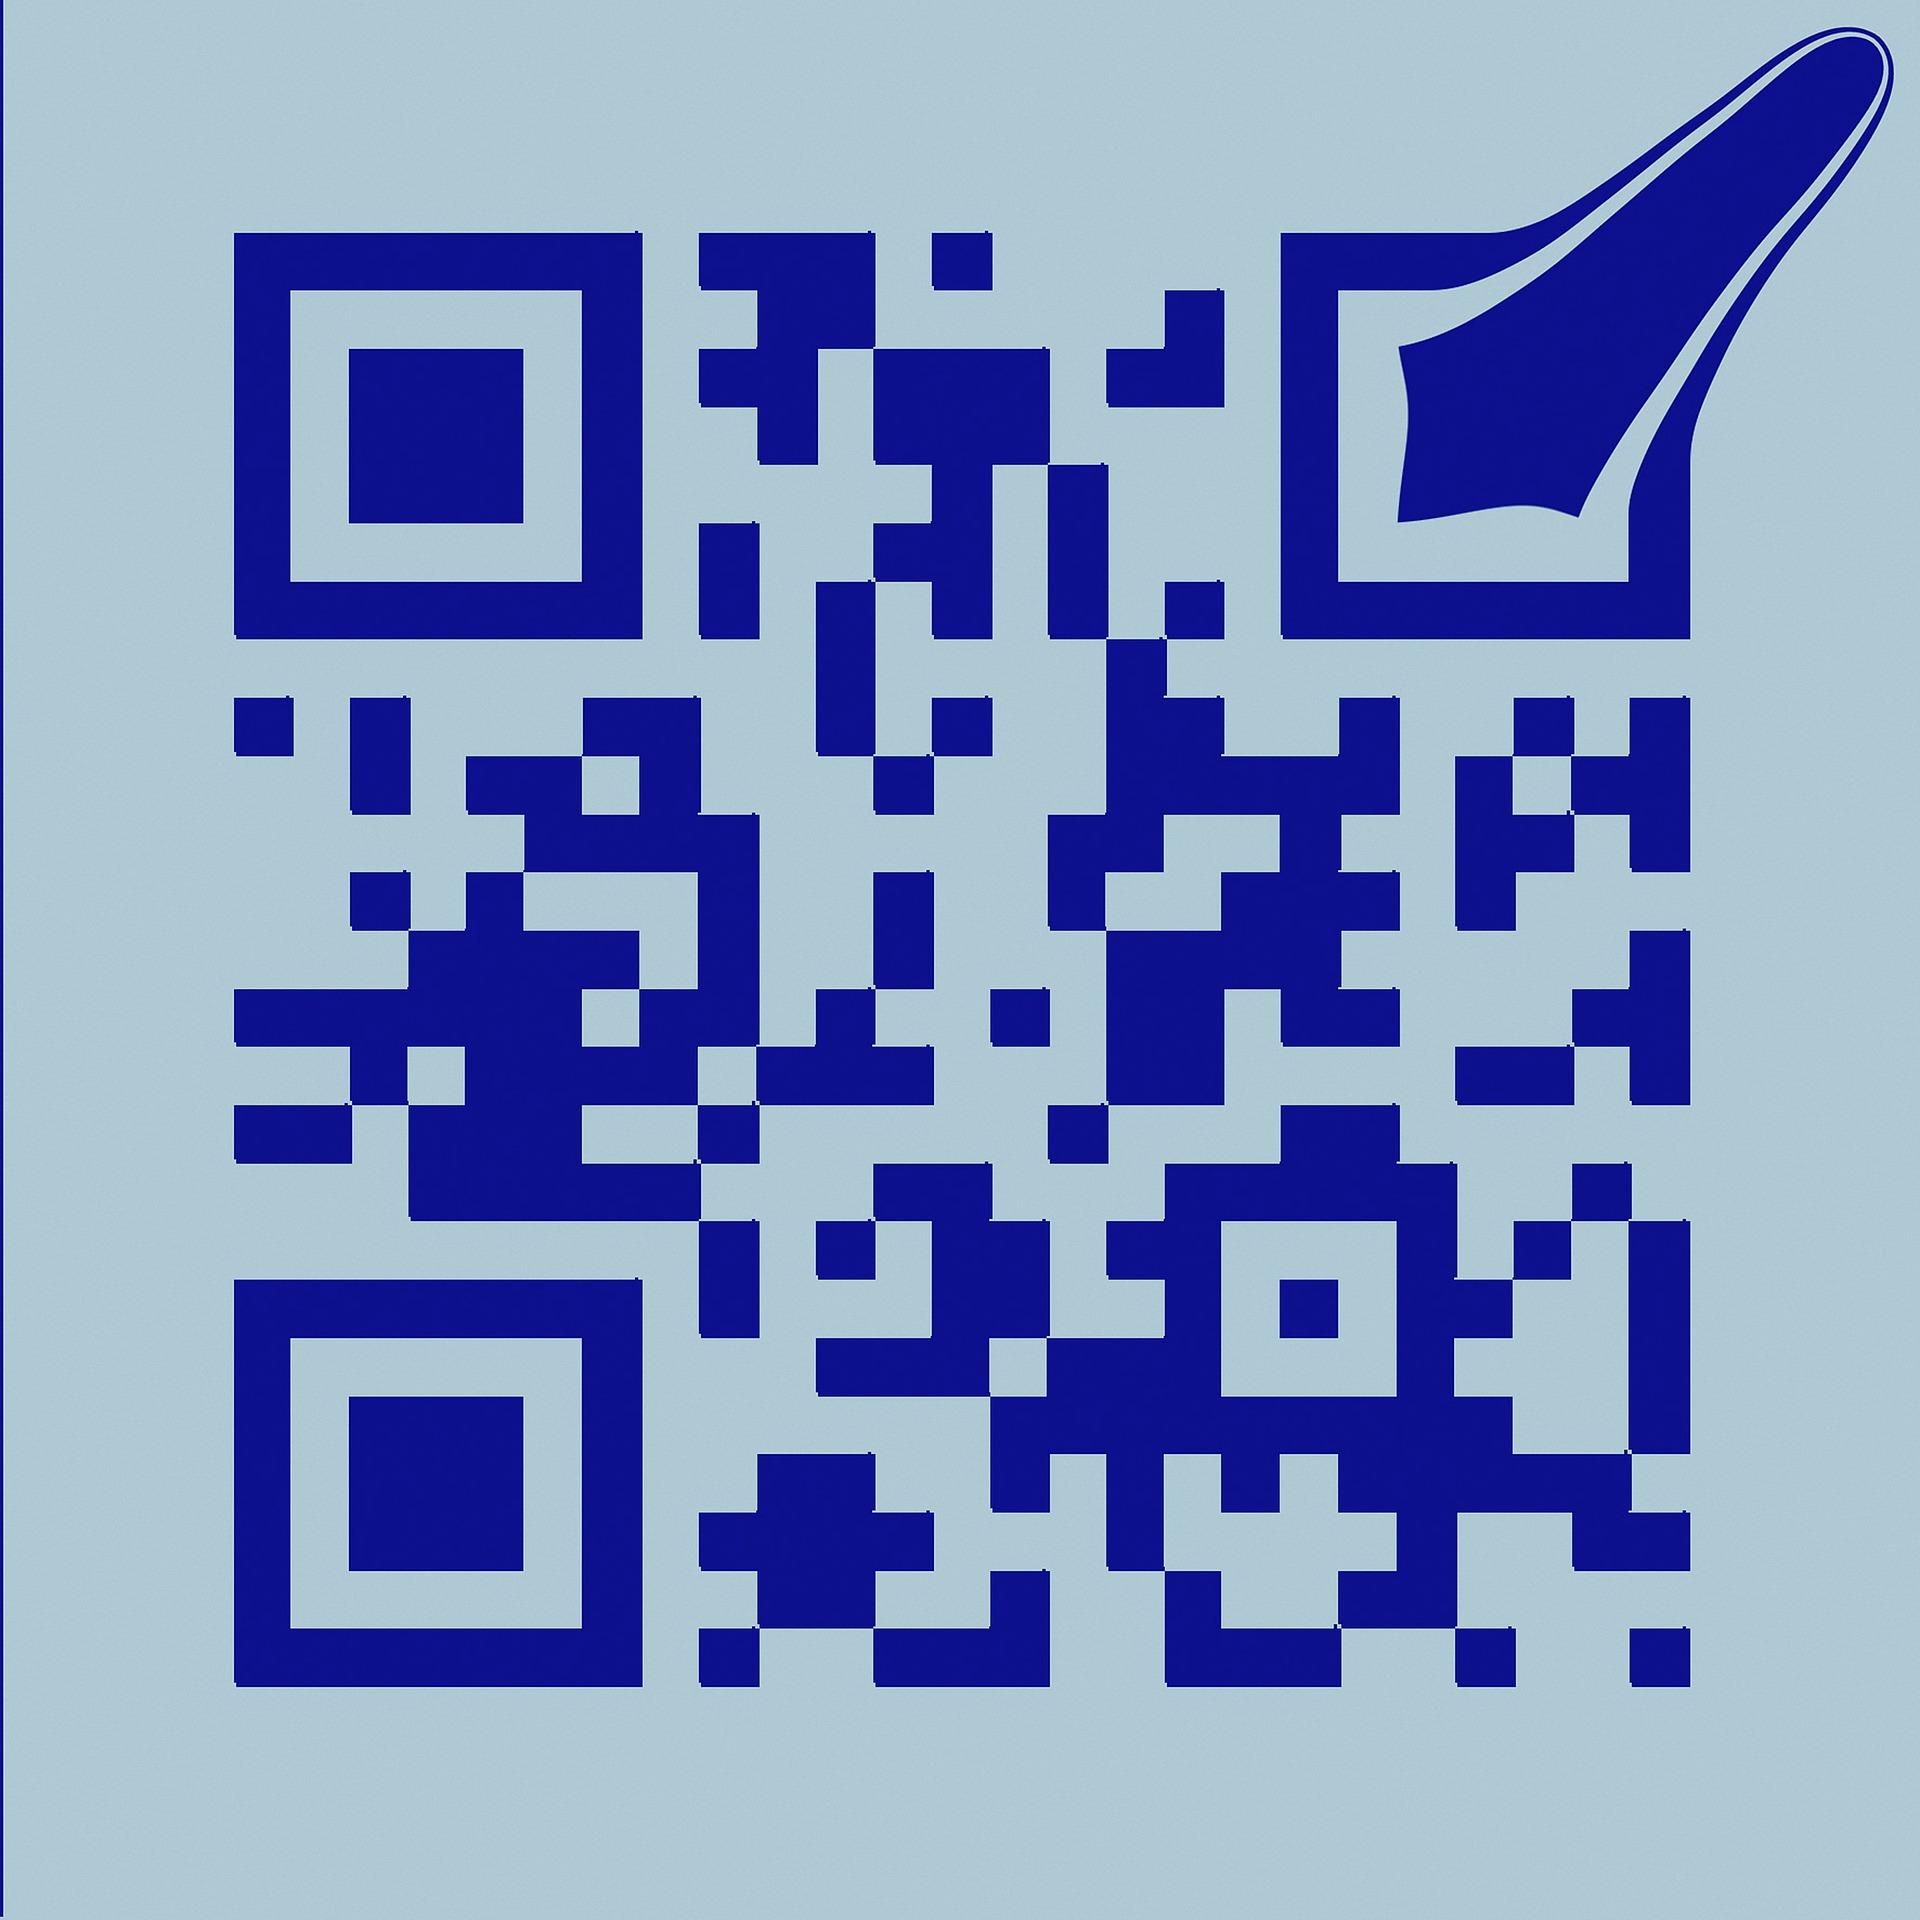 Scan qr code download app. QR код. Картина QR код. QR код синий. Иконка сканер QR-кода.